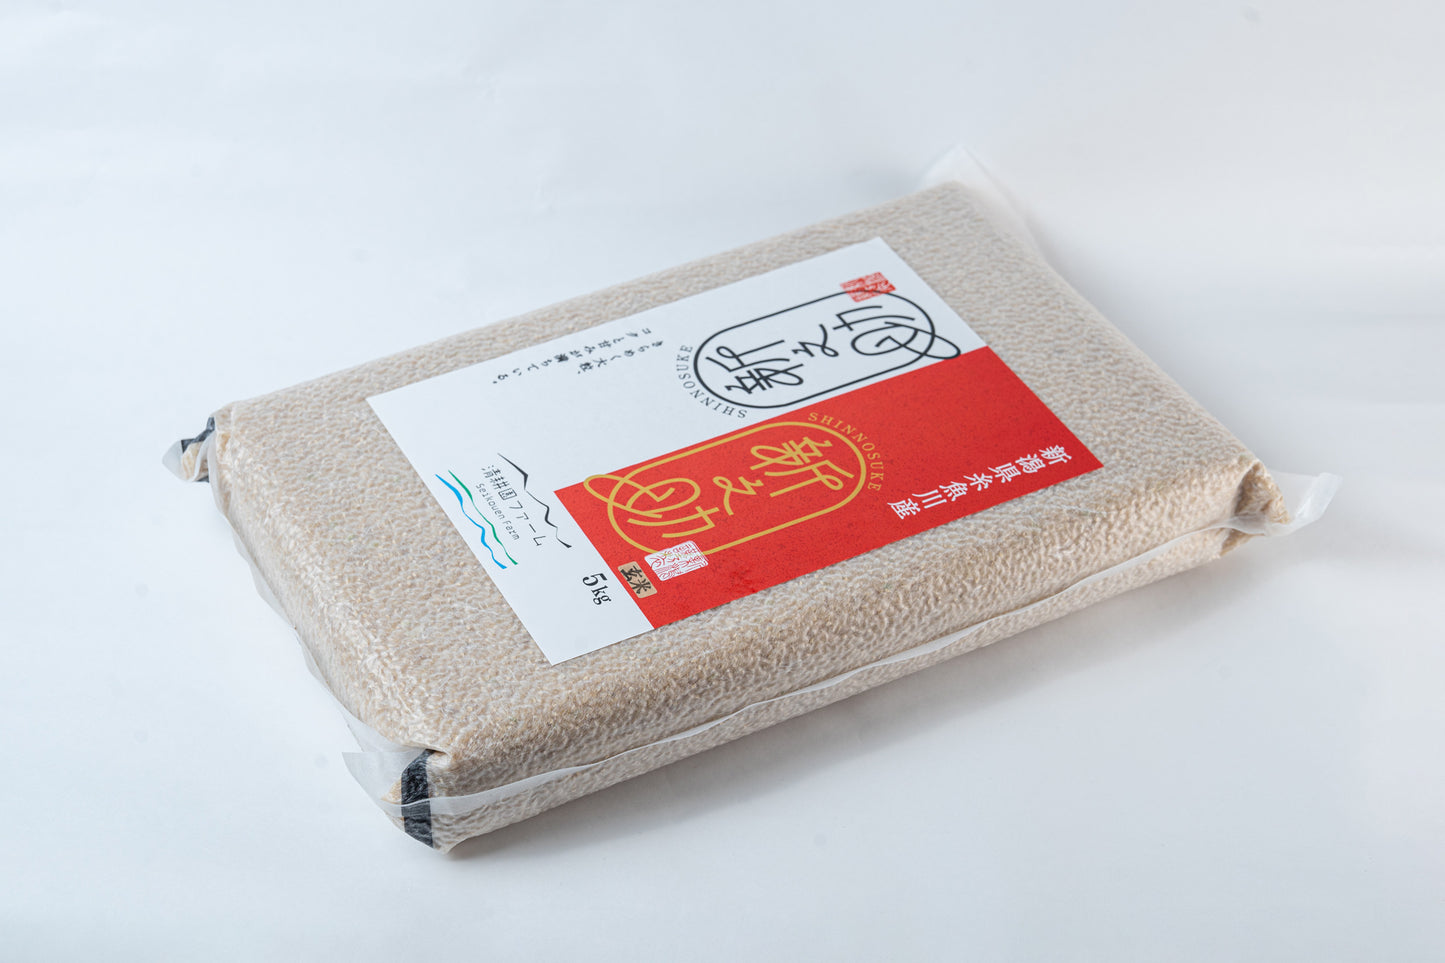 【R5年産】糸魚川産 新之助 玄米(3kg・5kg)